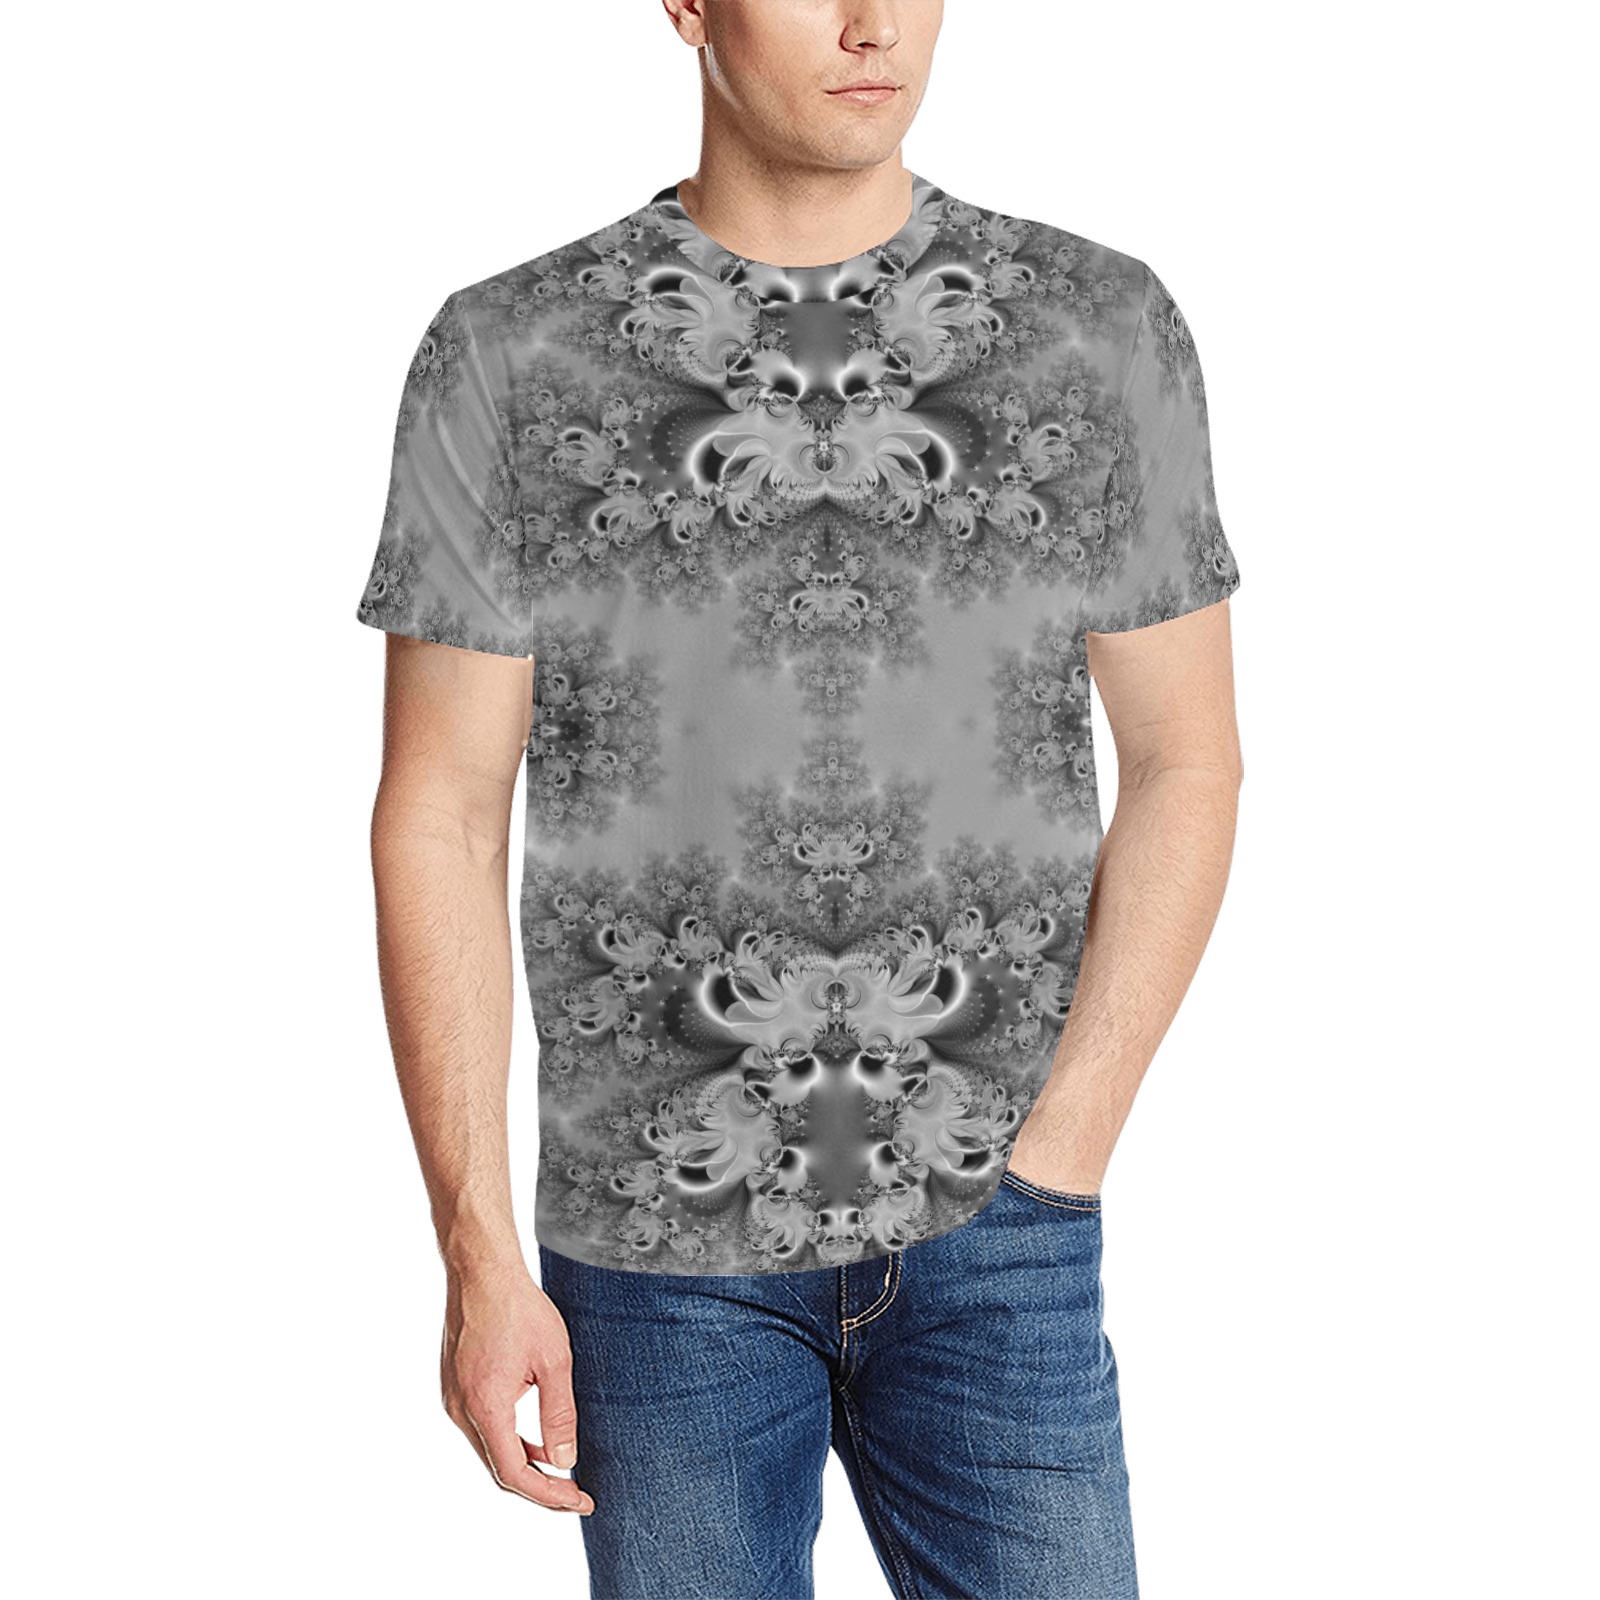 Cloudy Day in the Garden Frost Fractal Men's All Over Print T-Shirt (Random Design Neck) (Model T63)